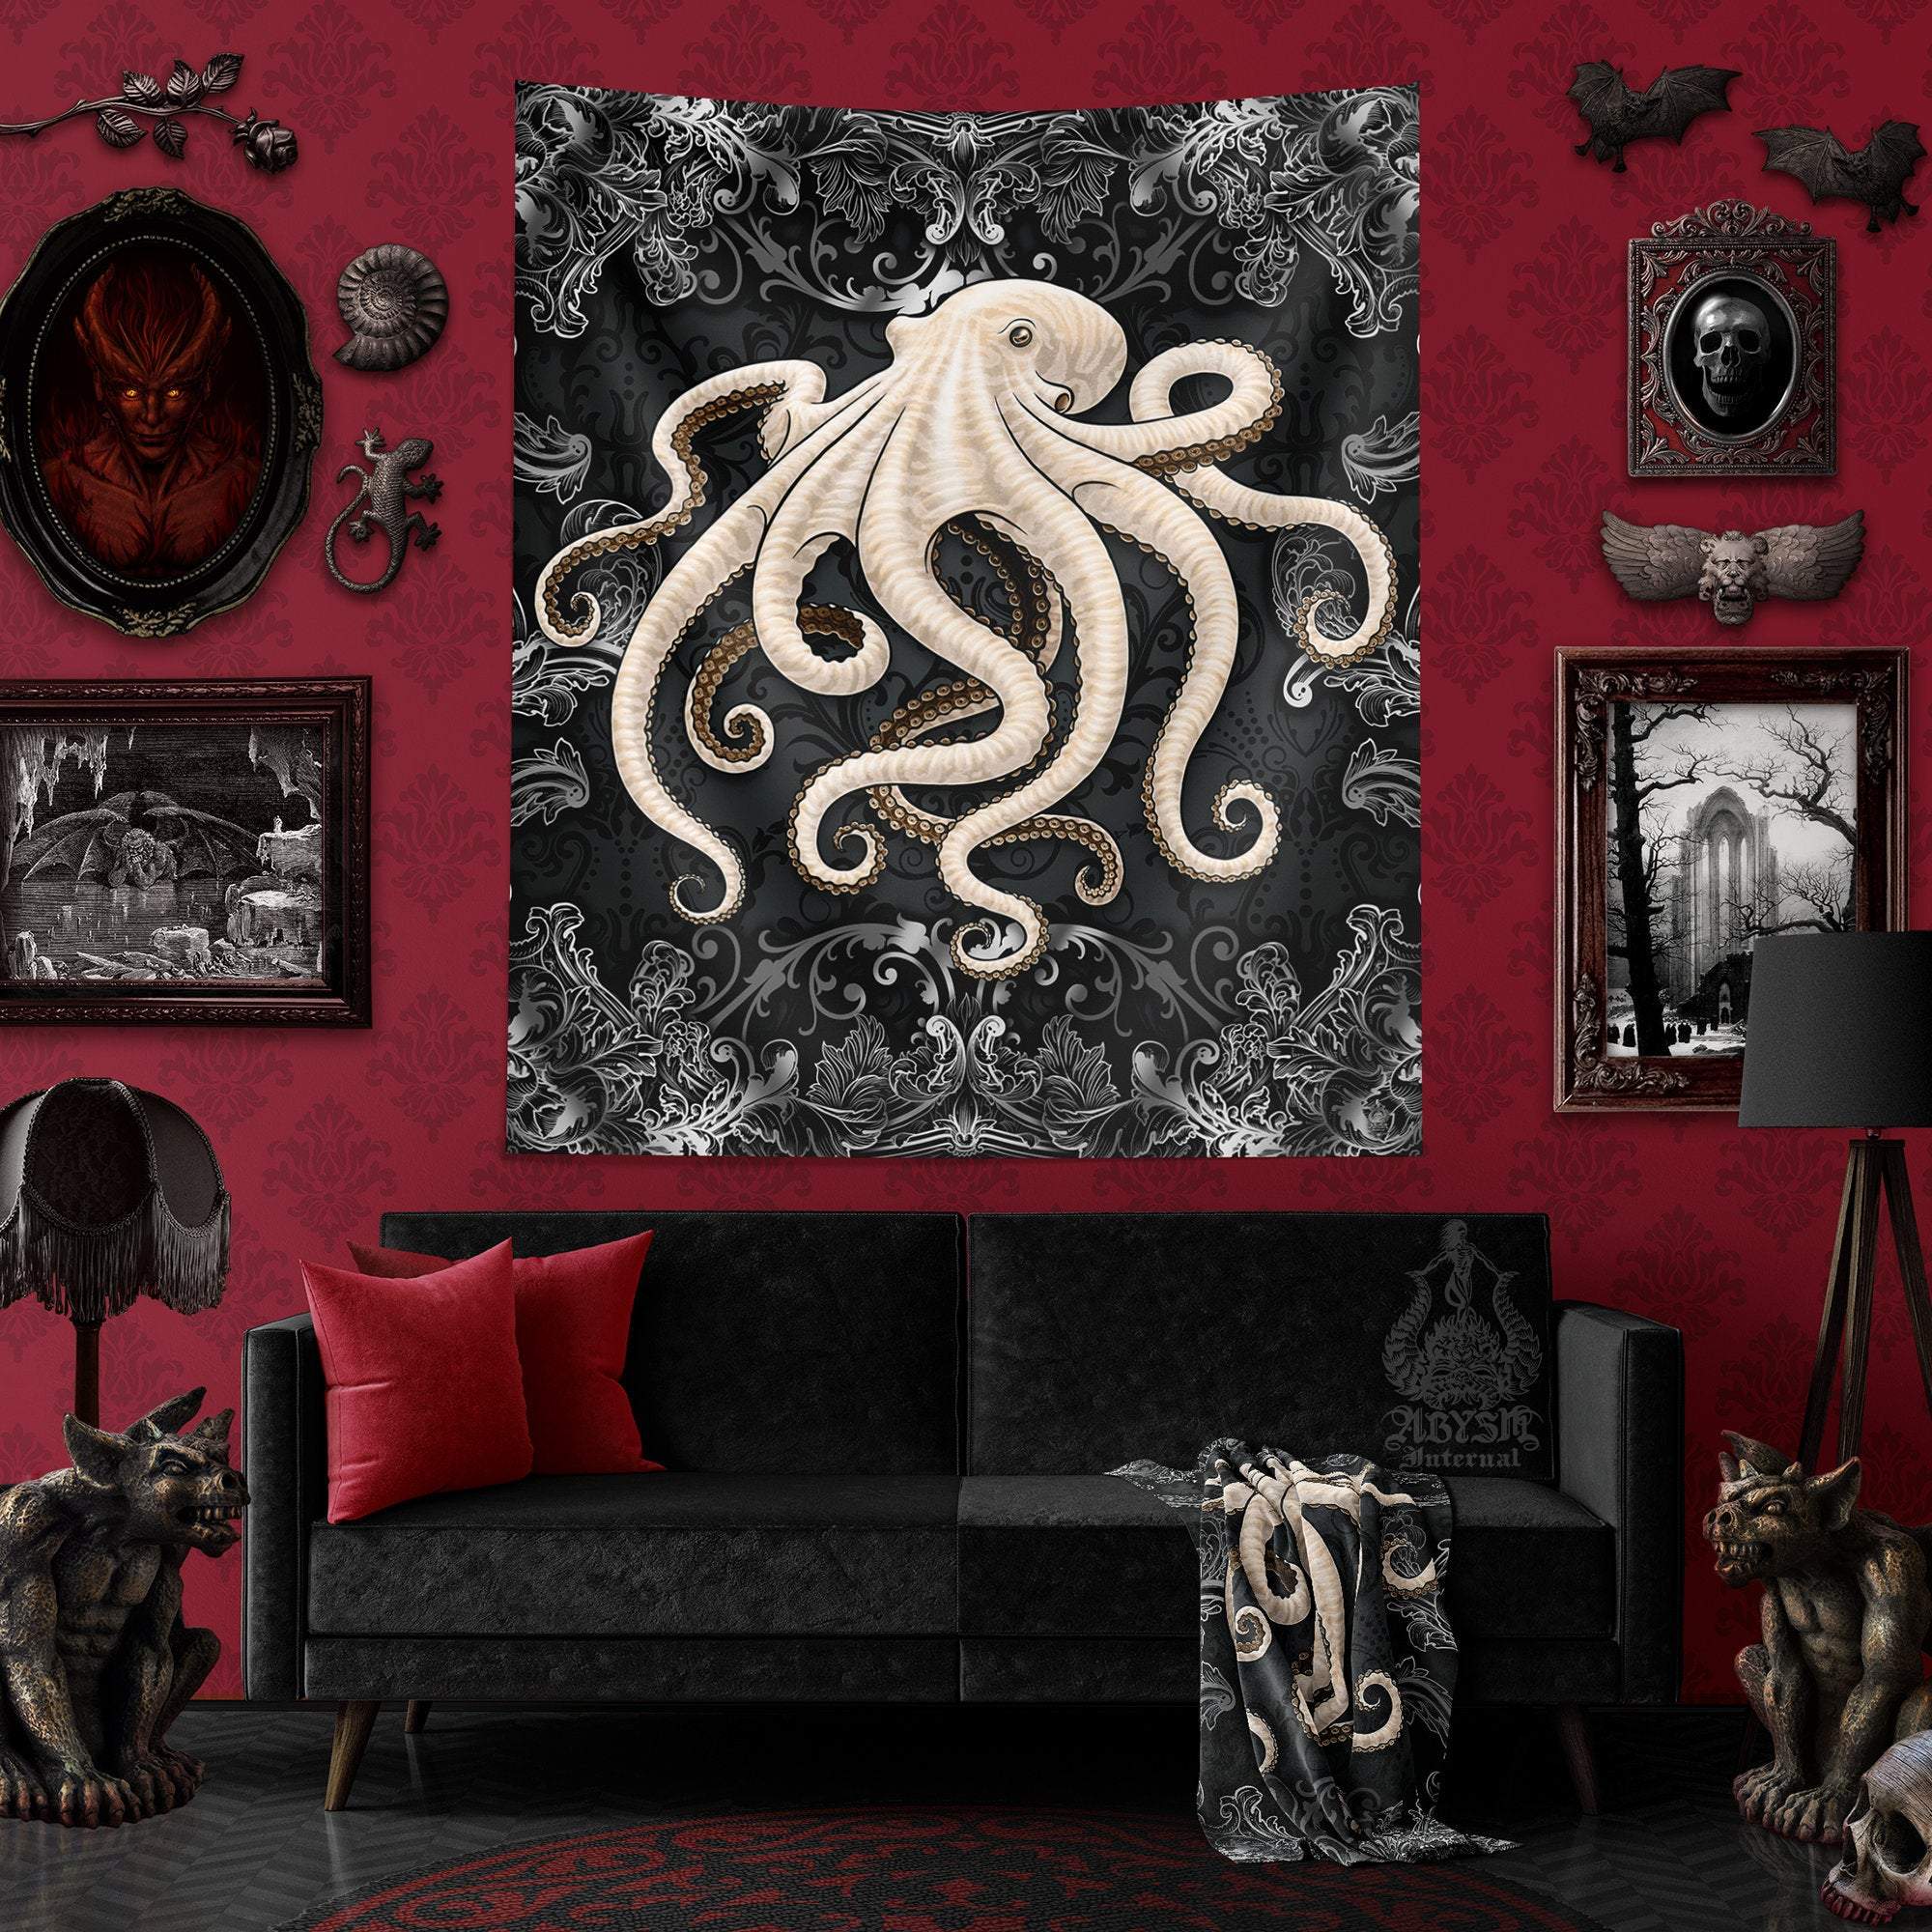 Octopus Tapestry, Coastal Wall Hanging, Beach Home Decor, Art Print - Dark, Black & White - Abysm Internal